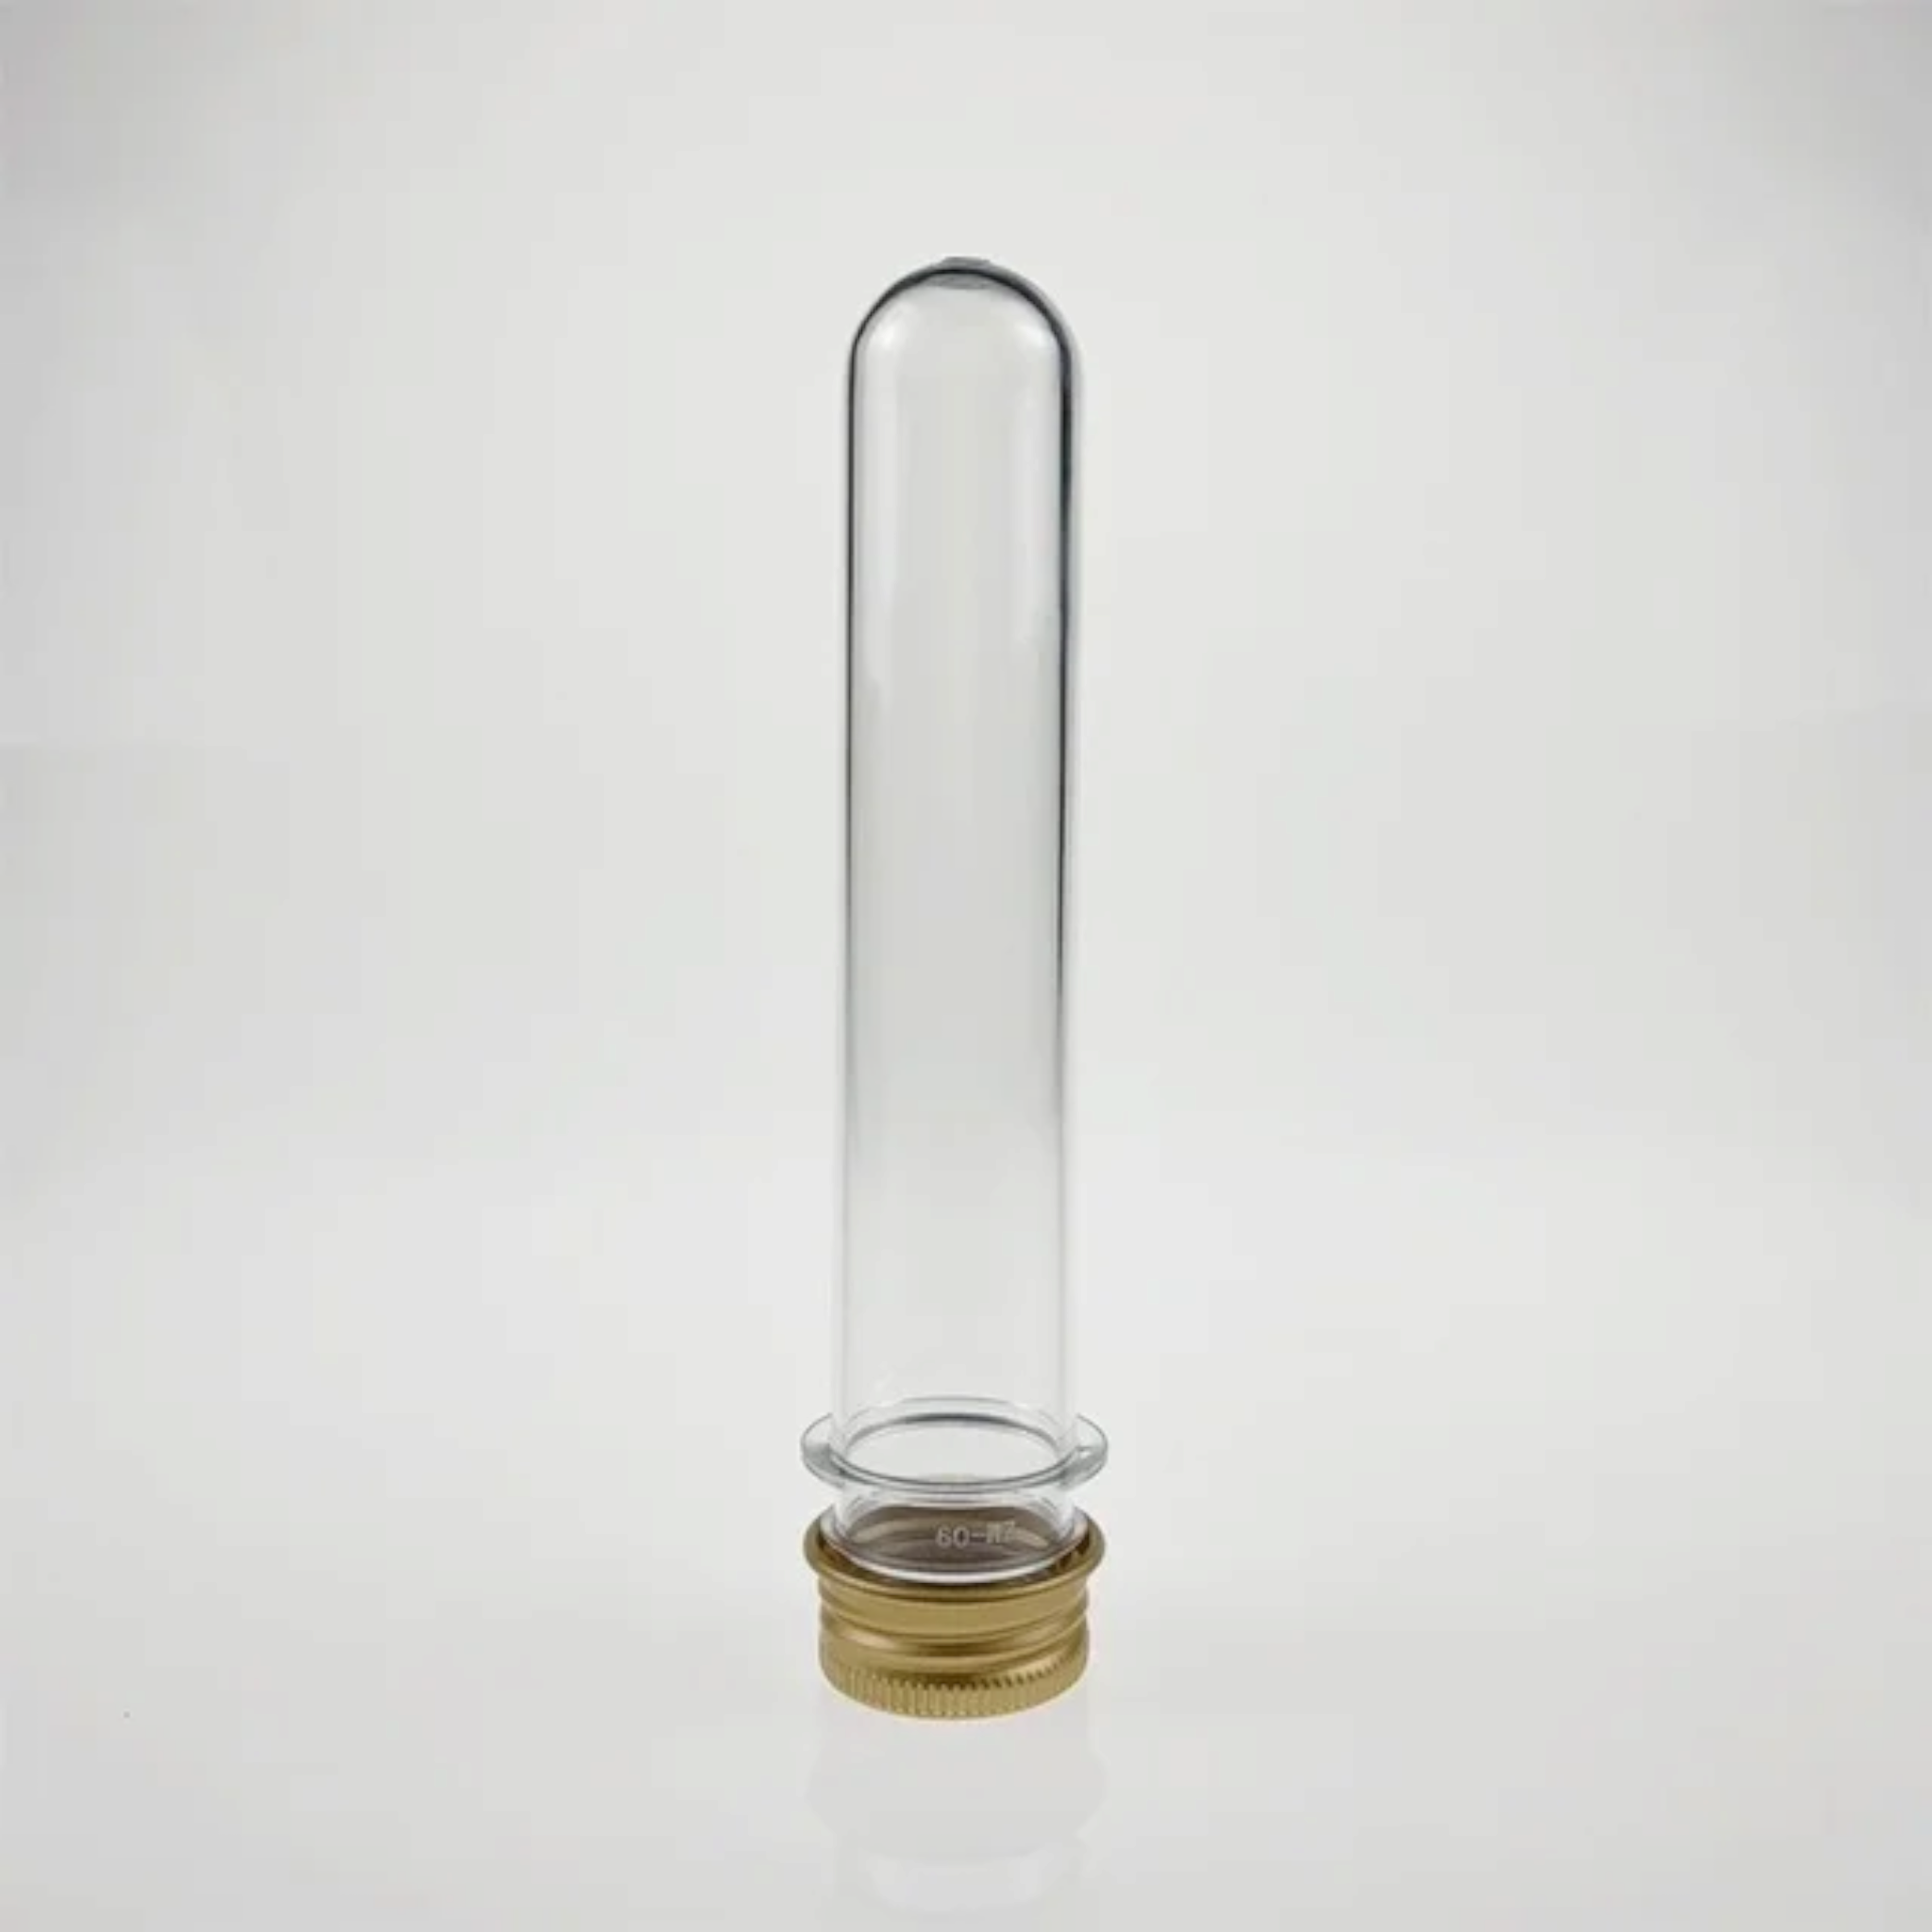 Plastic PET Test Tube 14cm - Vials Container Bottle Tube Shape with Lid